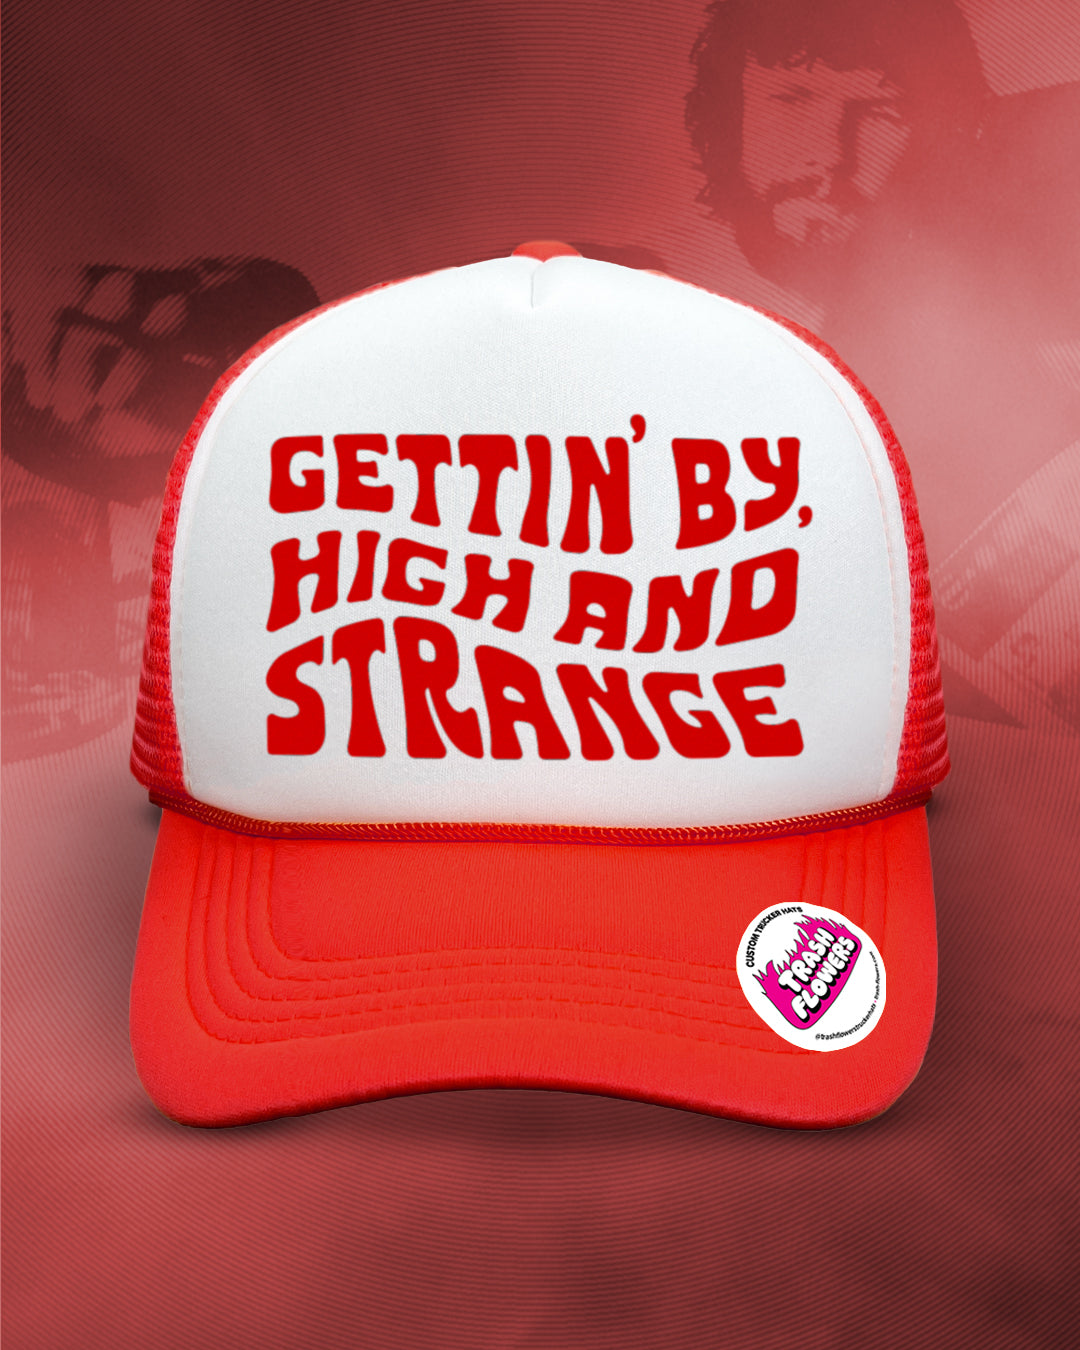 Gettin By Gettin High and Strange Trucker Hat